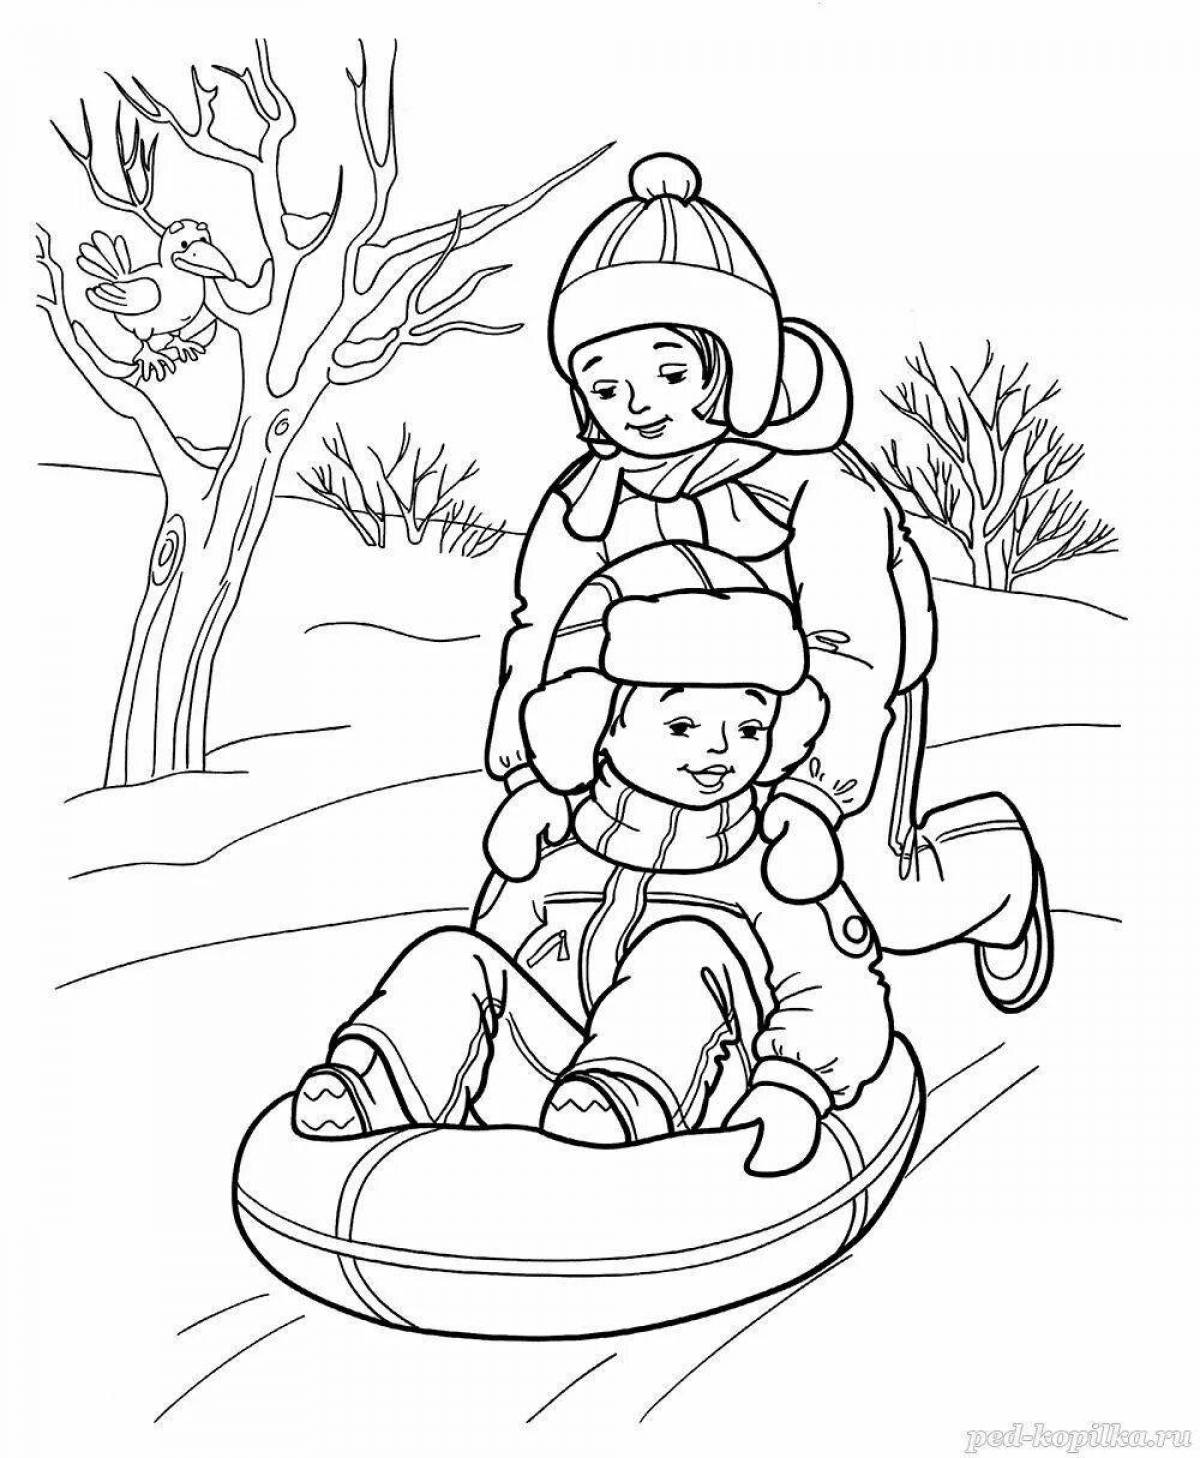 Children on a slide in winter #2